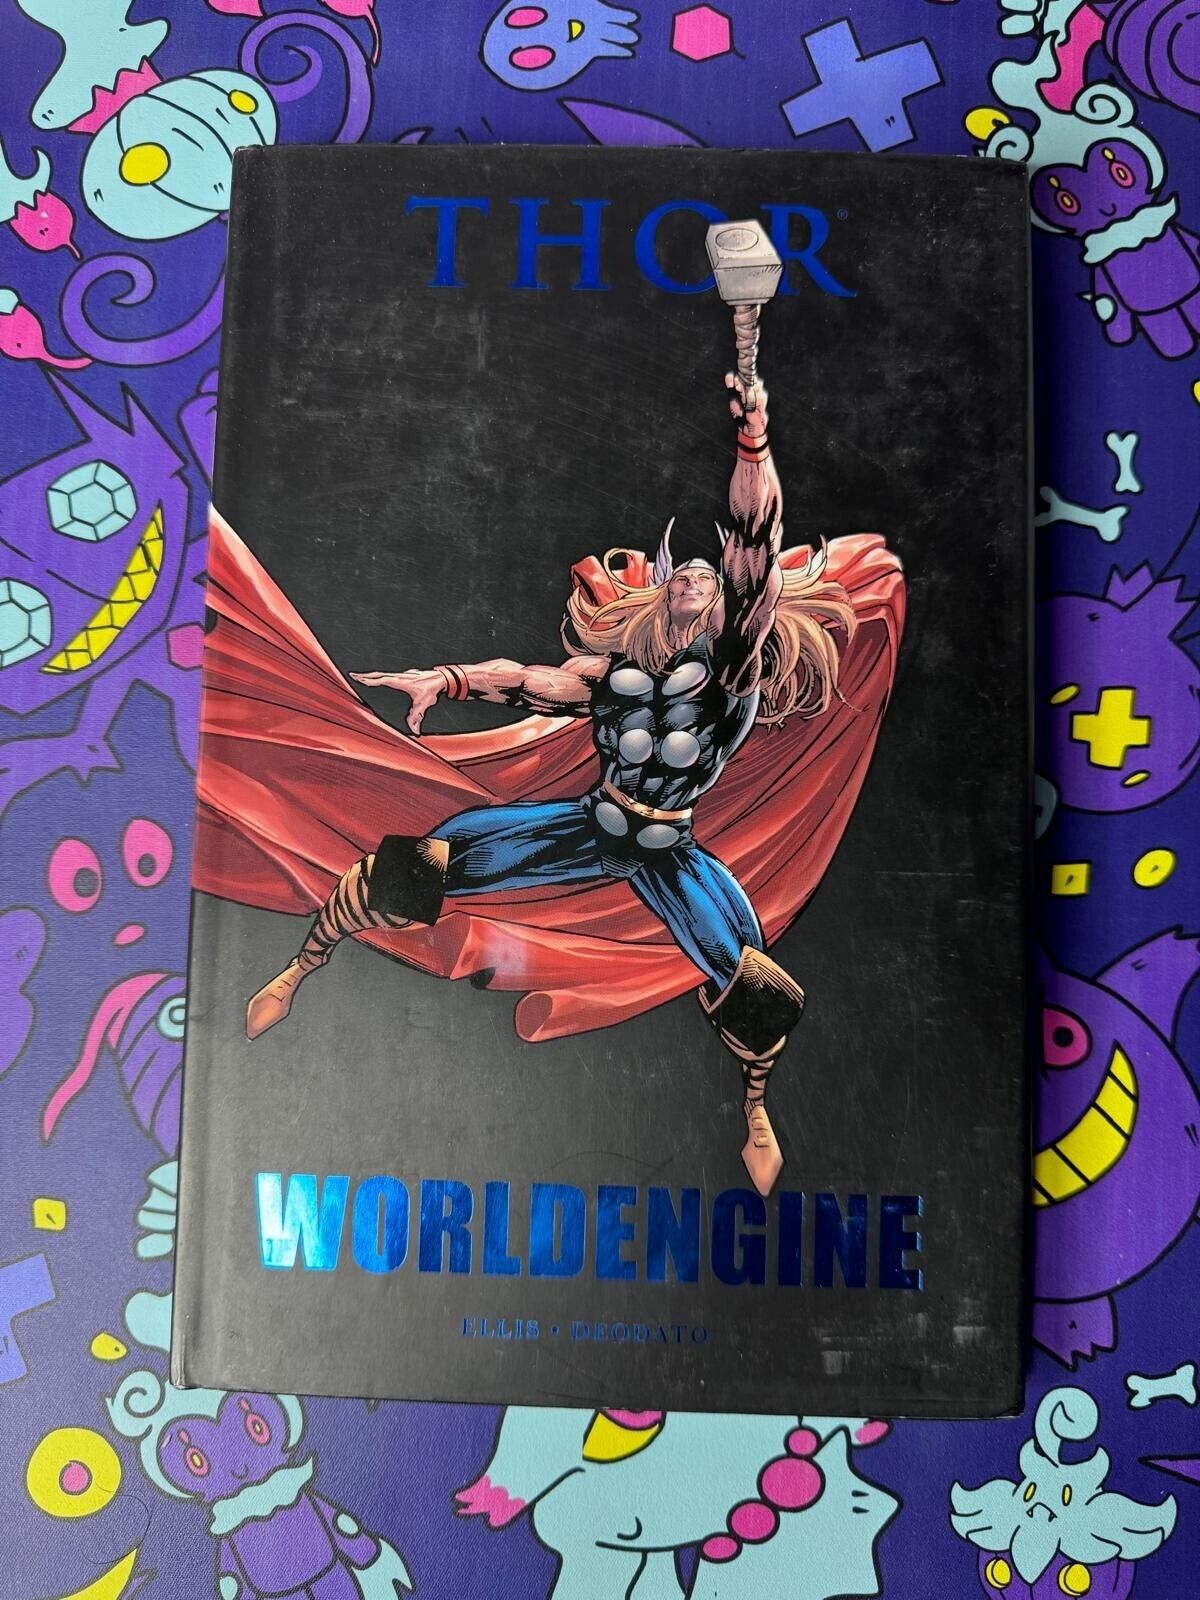 Thor: Worldengine Hardcover (Marvel, 2011) by Warren Ellis Mike Deodato Complete